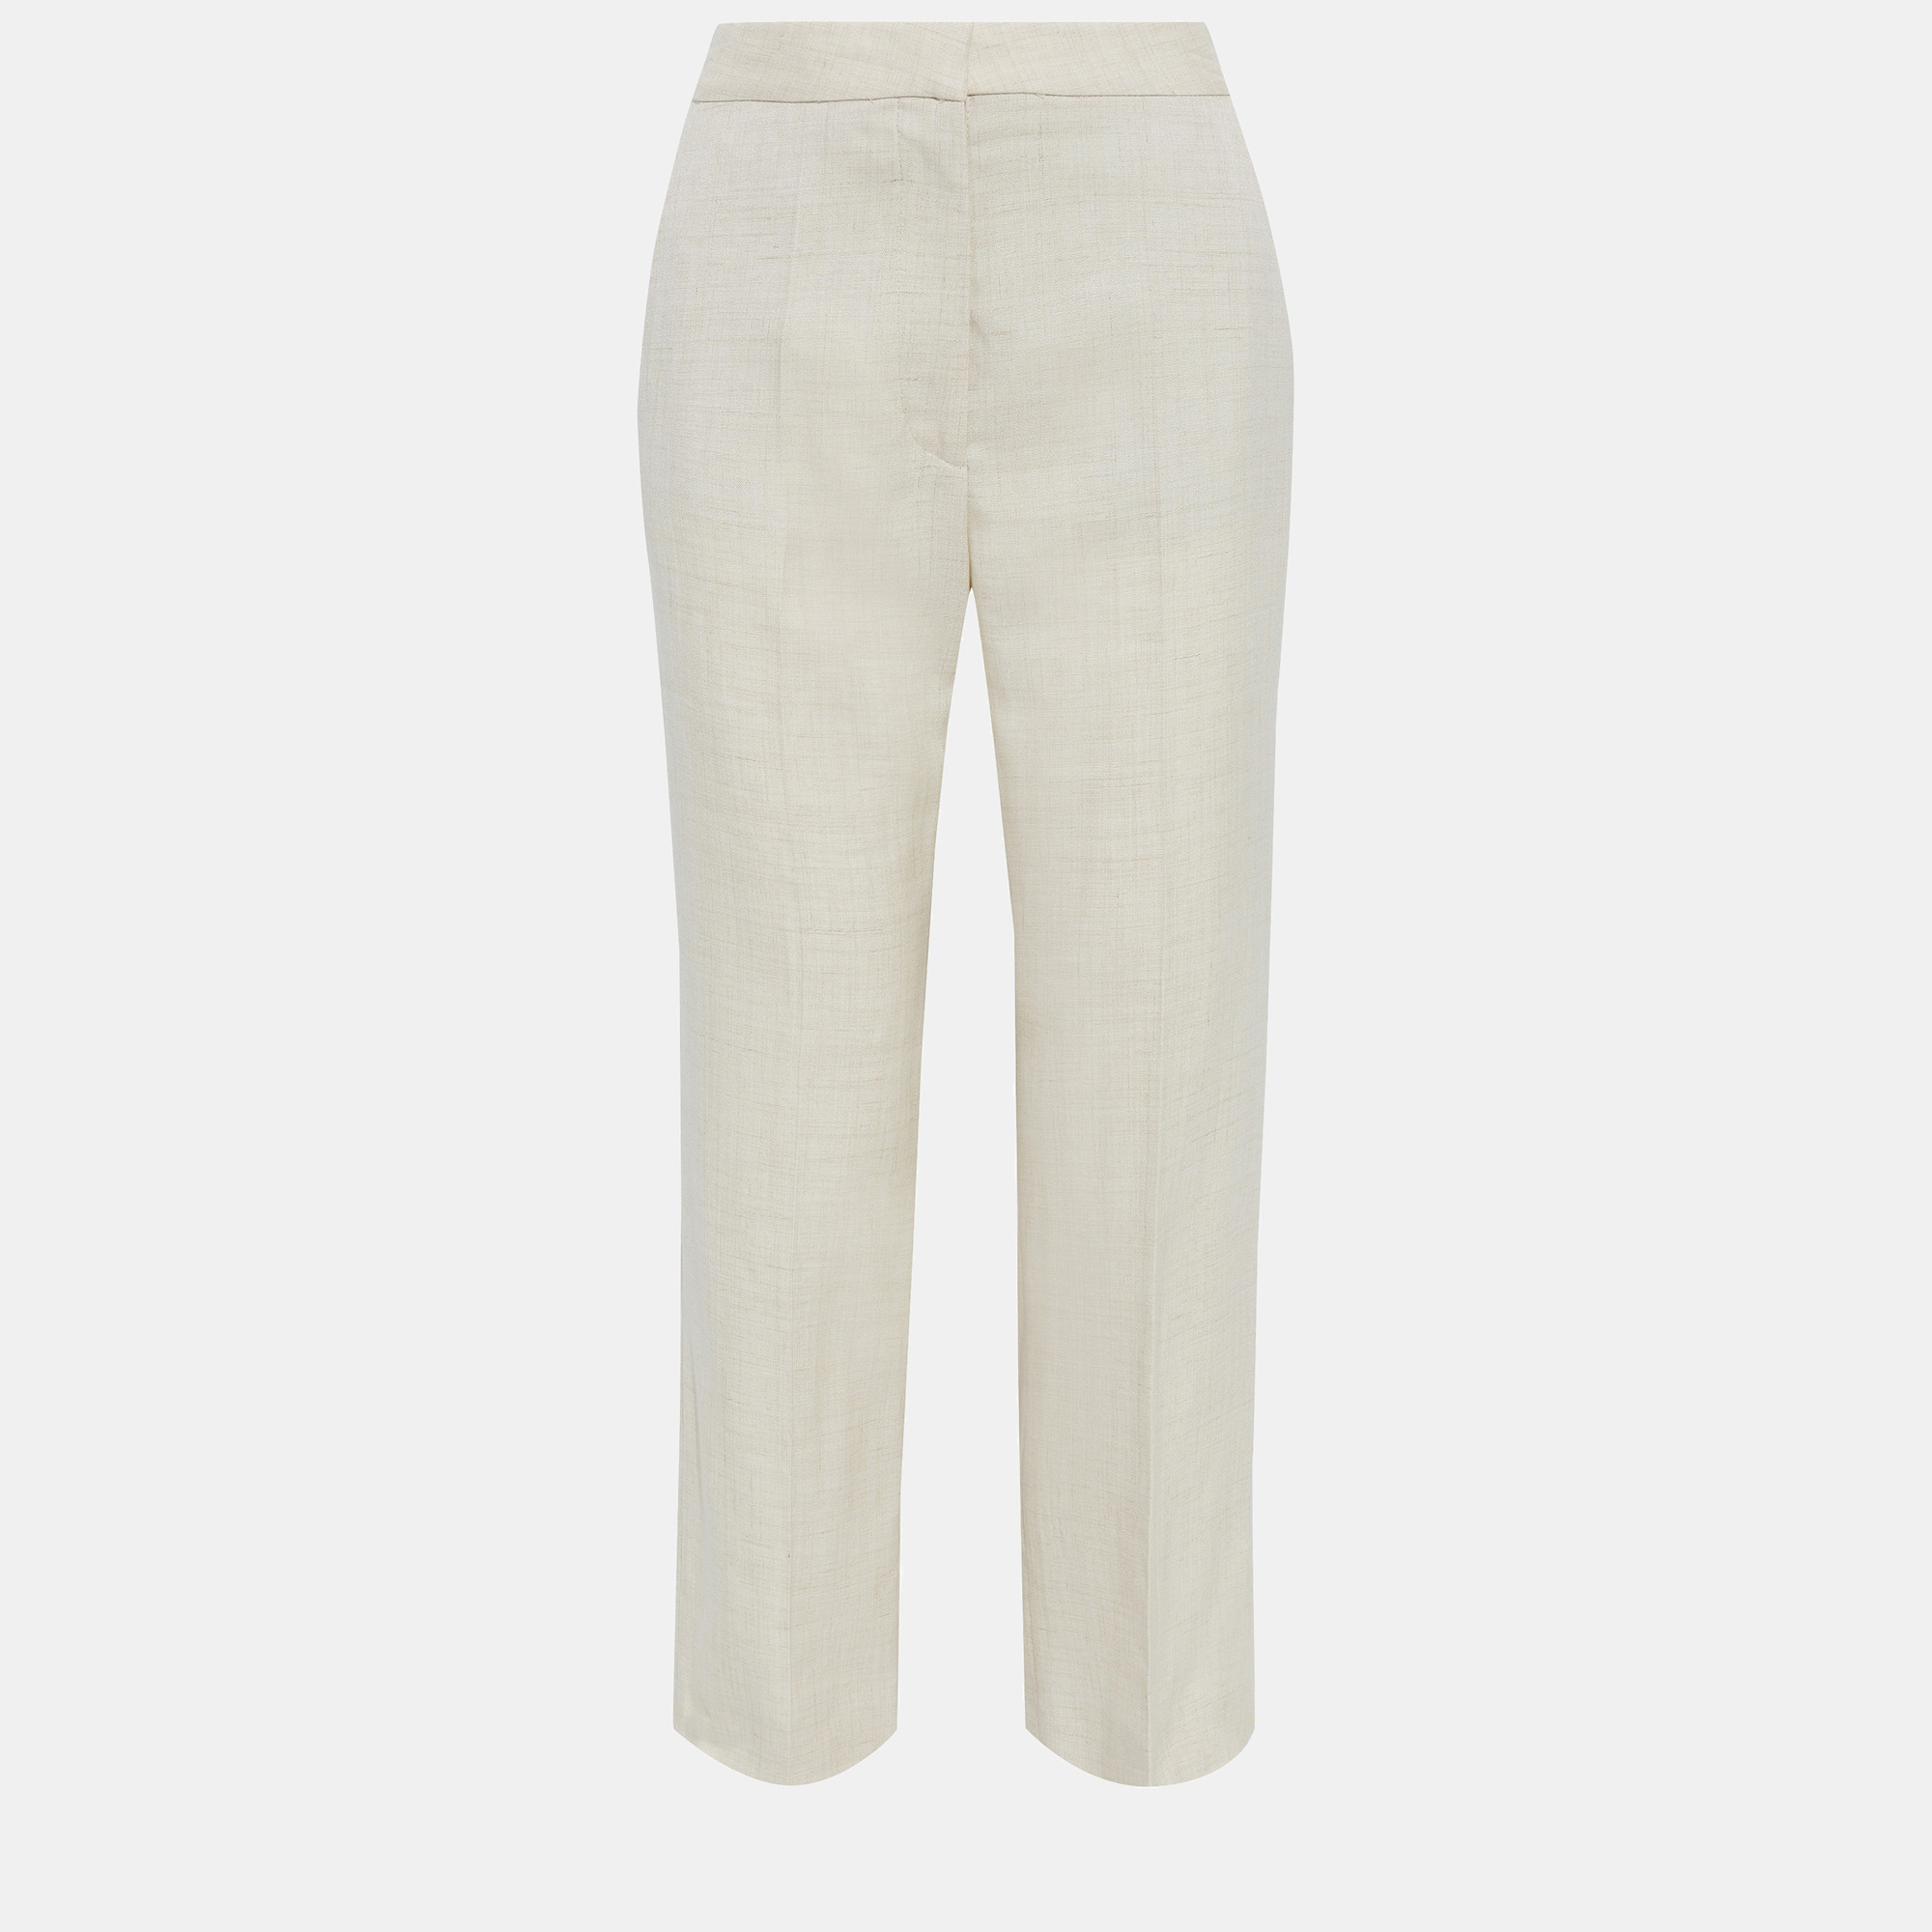 Stella mccartney beige linen-blend straight leg pants s (it 38)